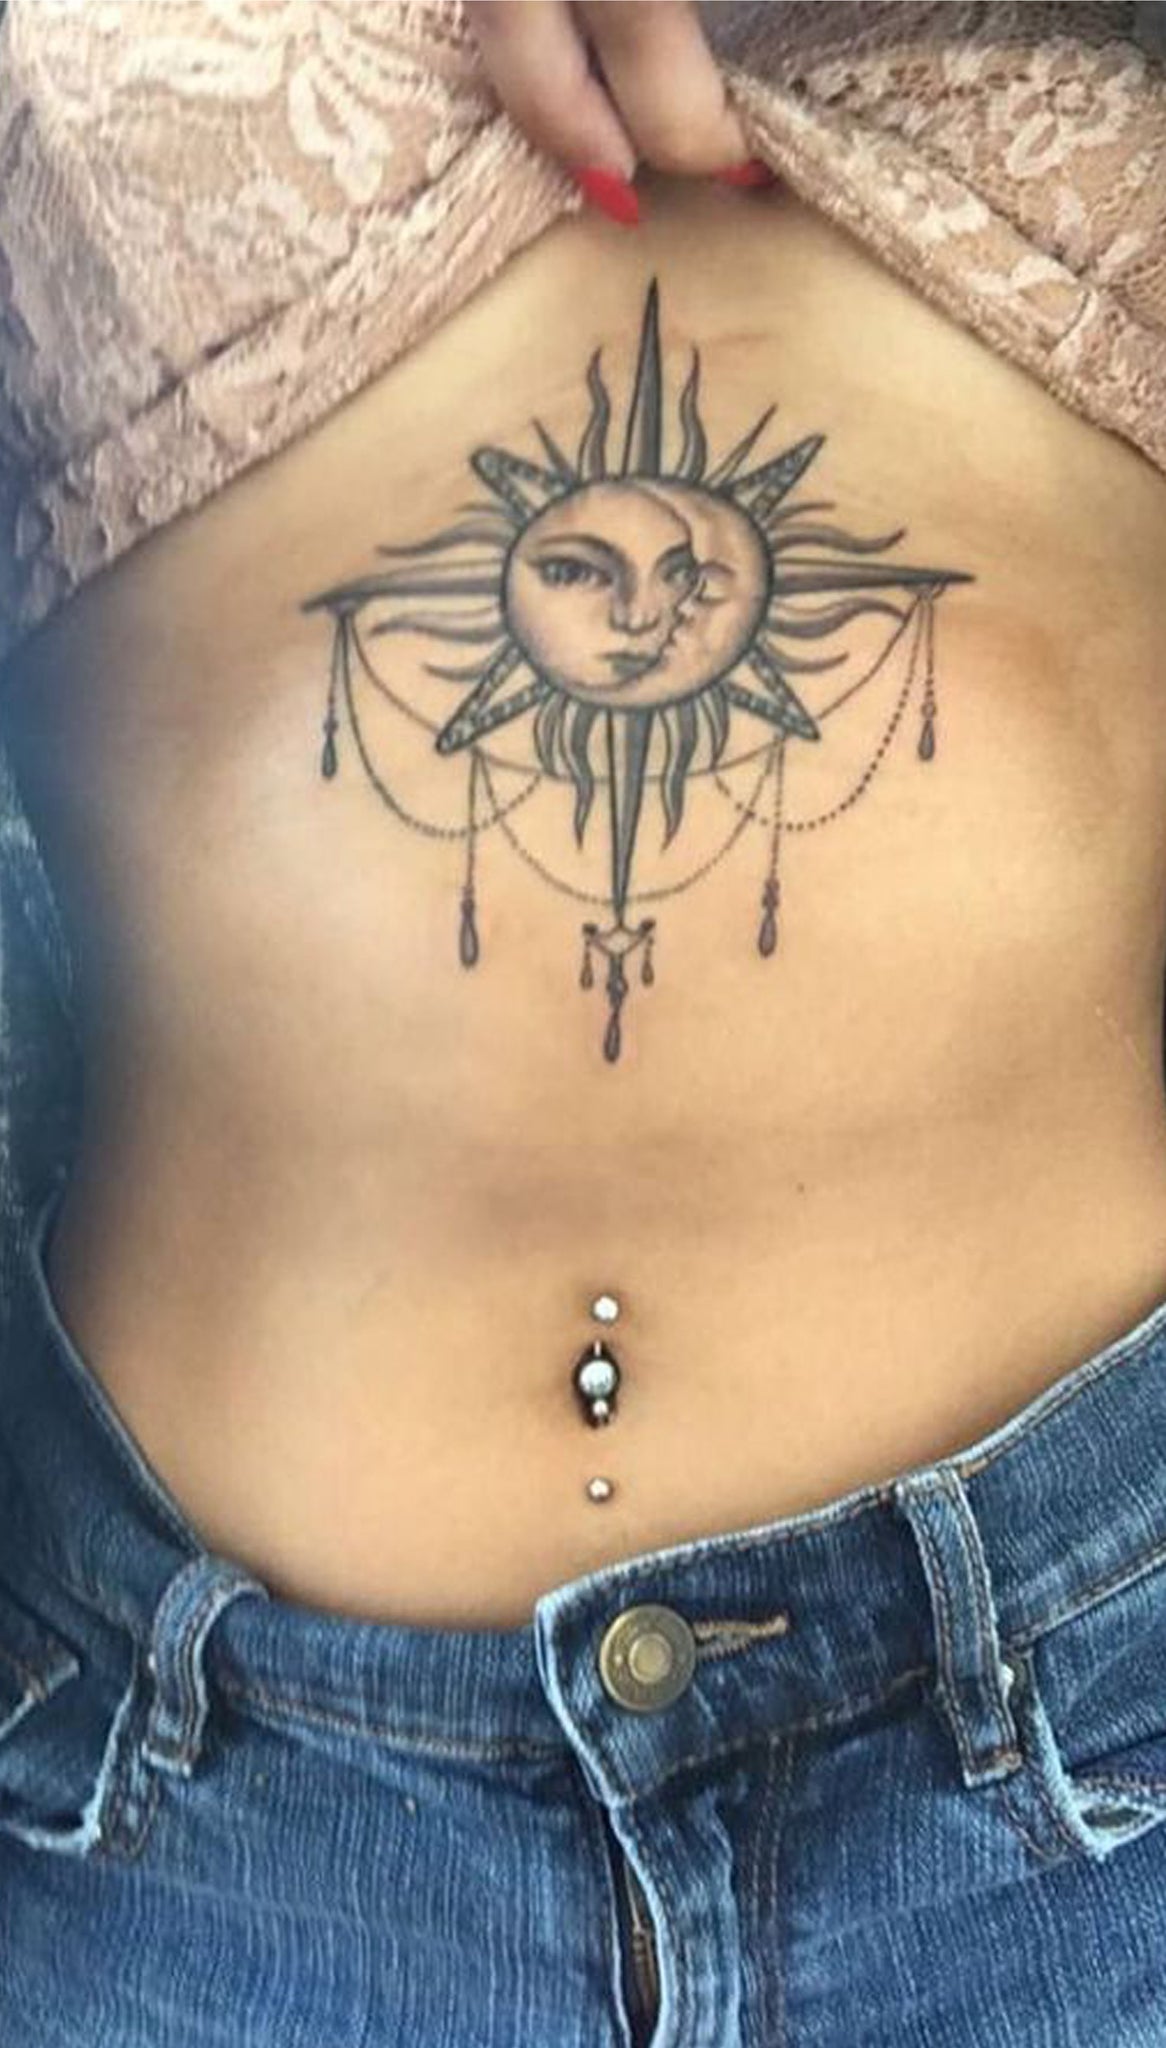 Unique Sun Sternum Tattoo Ideas for Women - ideas de tatuaje de esternón del sol para las mujeres - www.MyBodiArt.com #tattoos